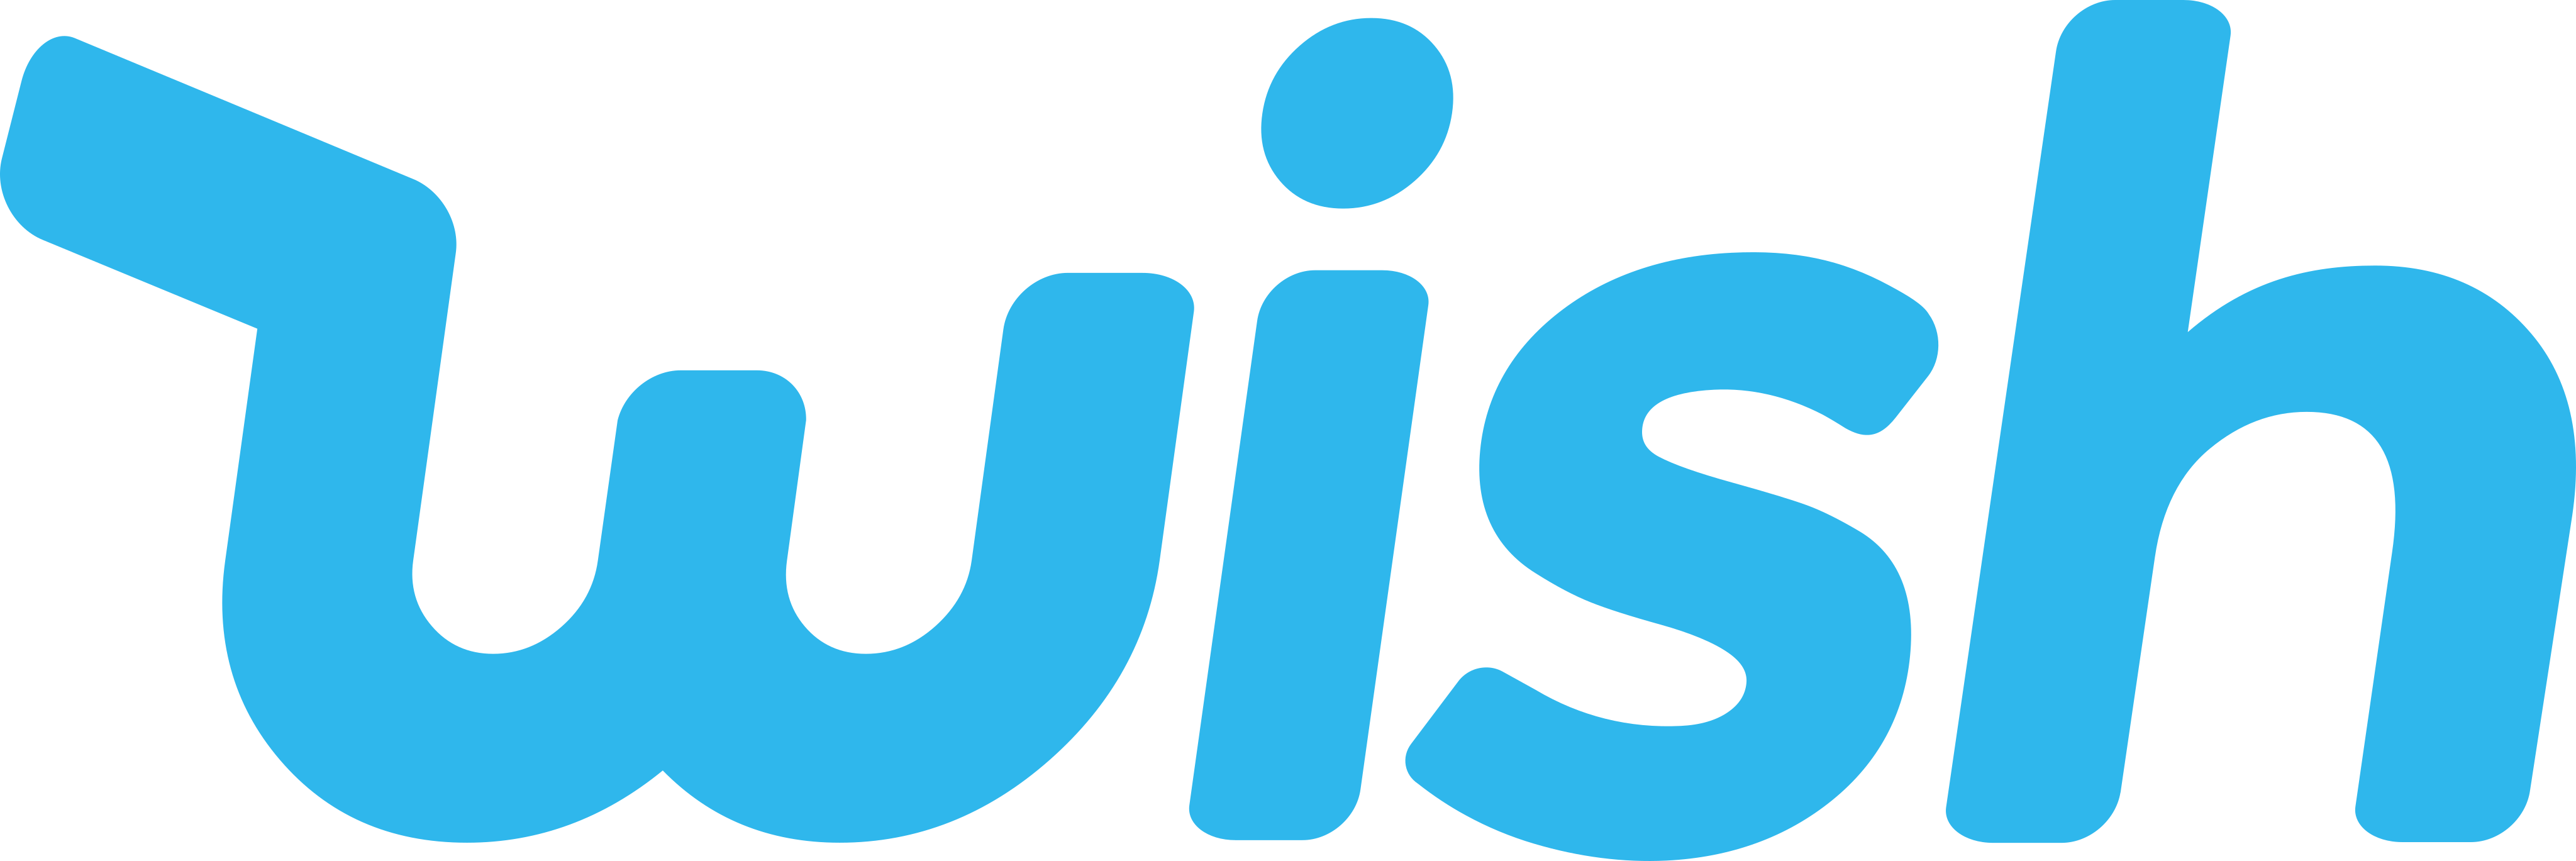 wish-logo